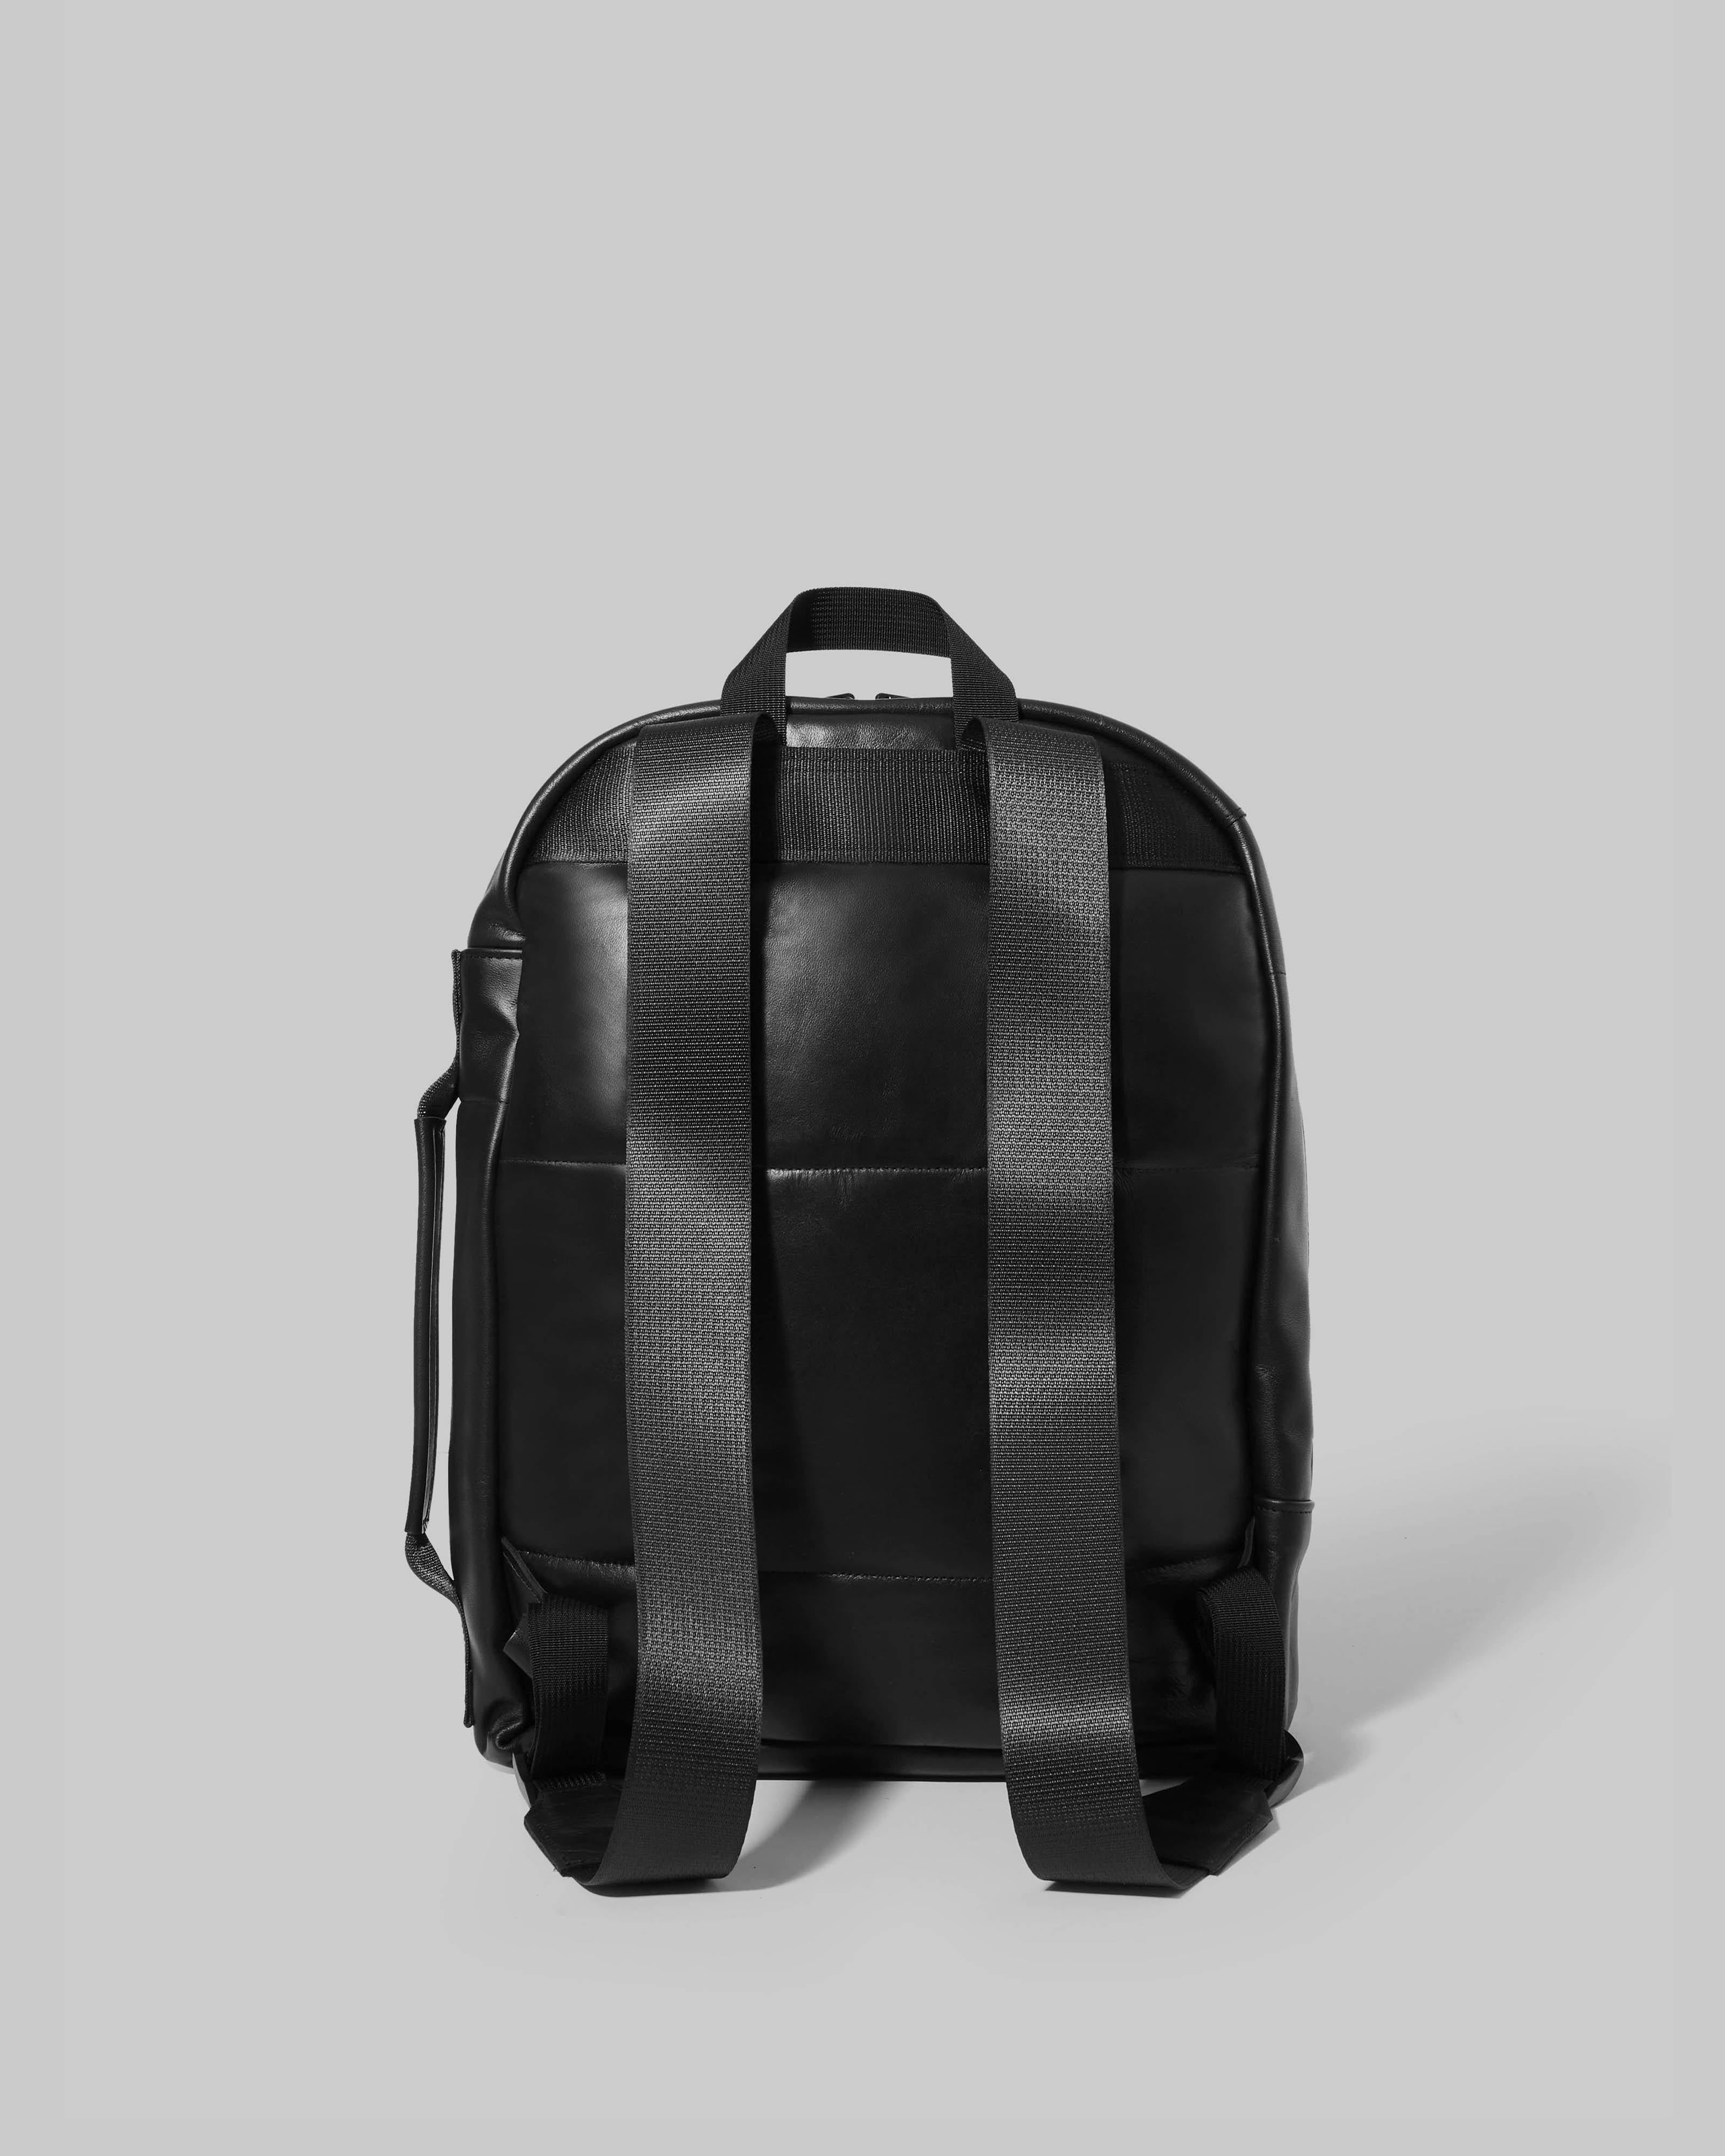 SHIGERU Backpack - 457 ANEW | Atelier IV V VII Inc.